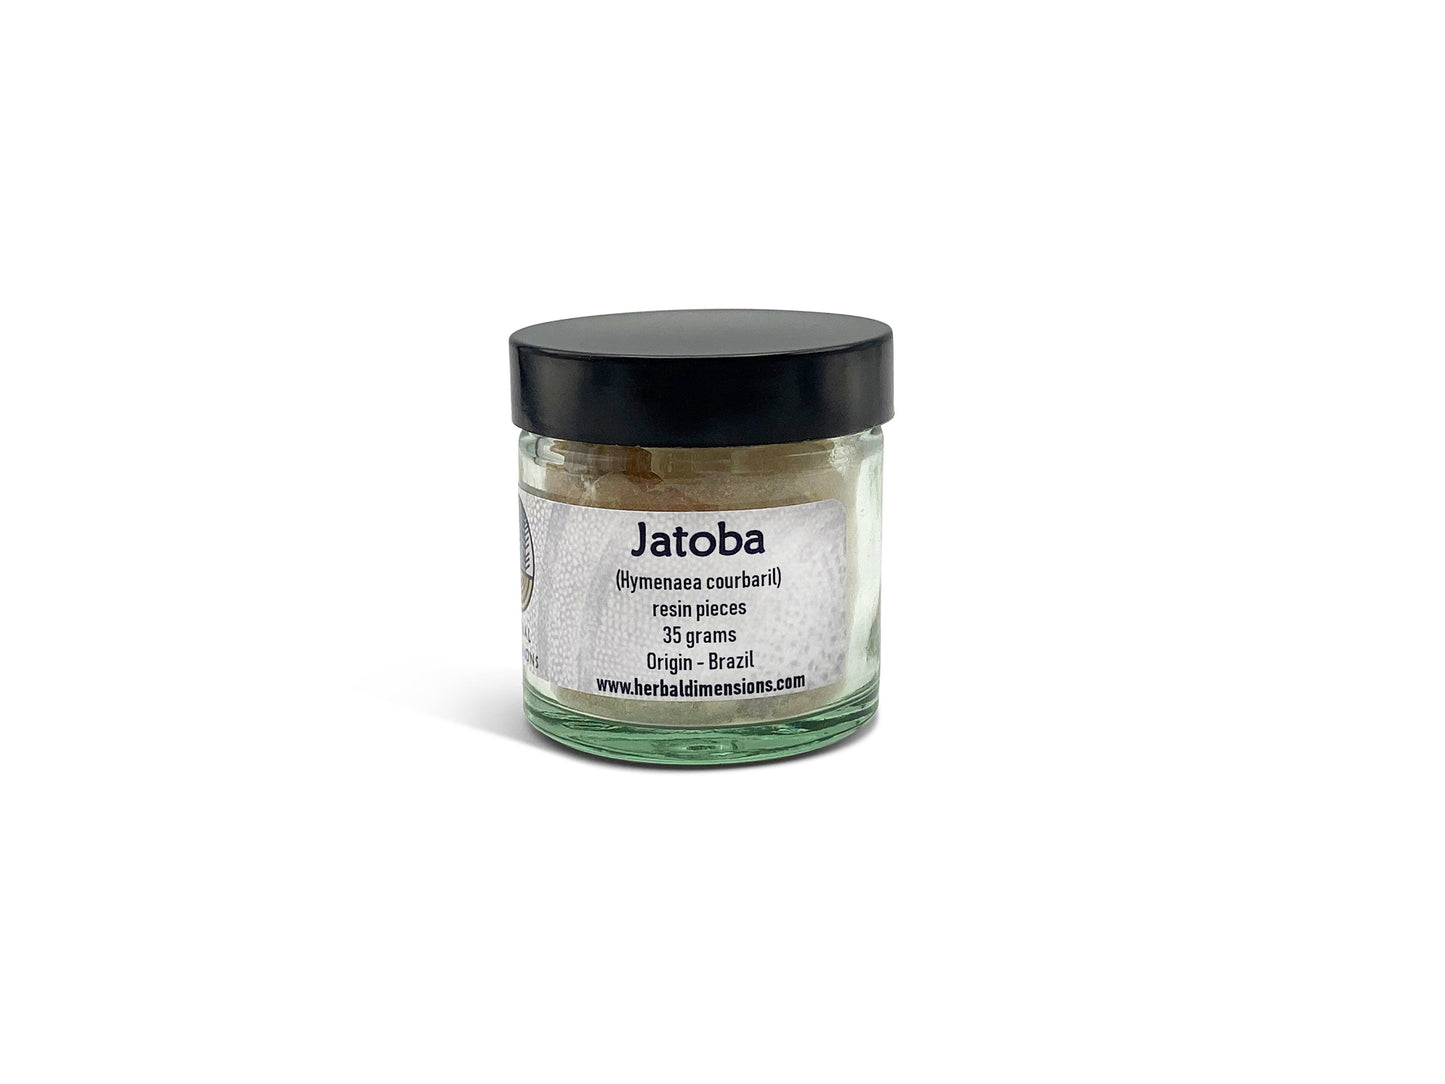 Jatoba - Herbaldimensions.com